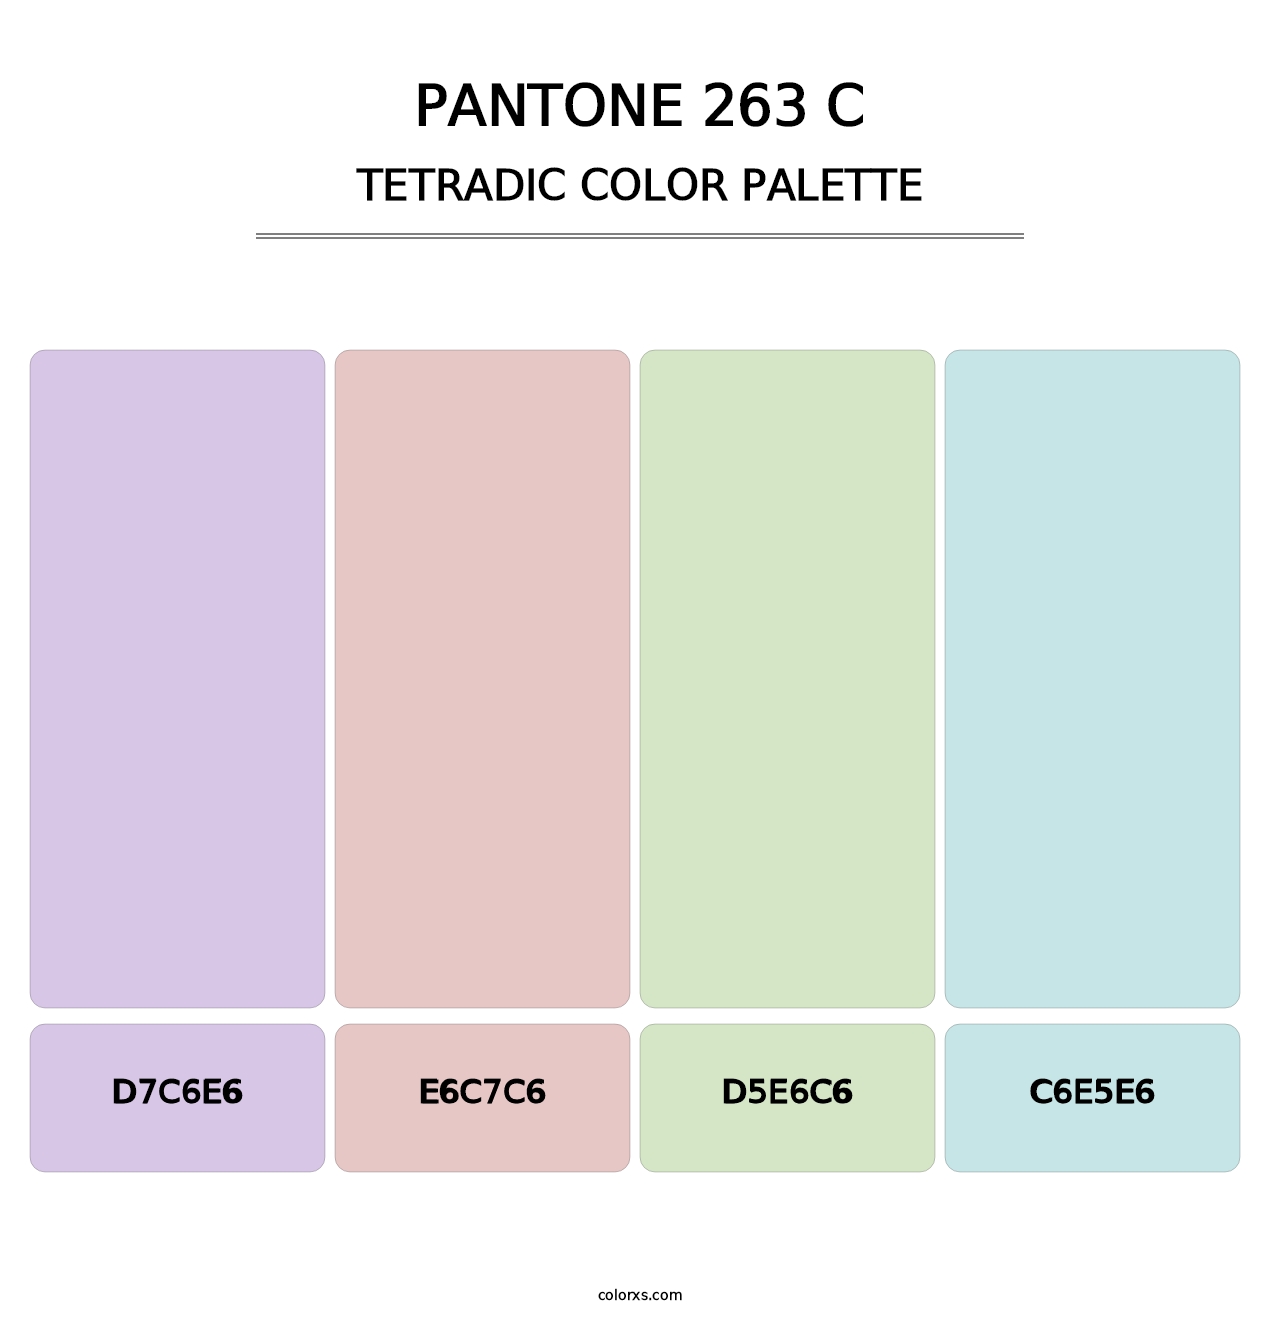 PANTONE 263 C - Tetradic Color Palette